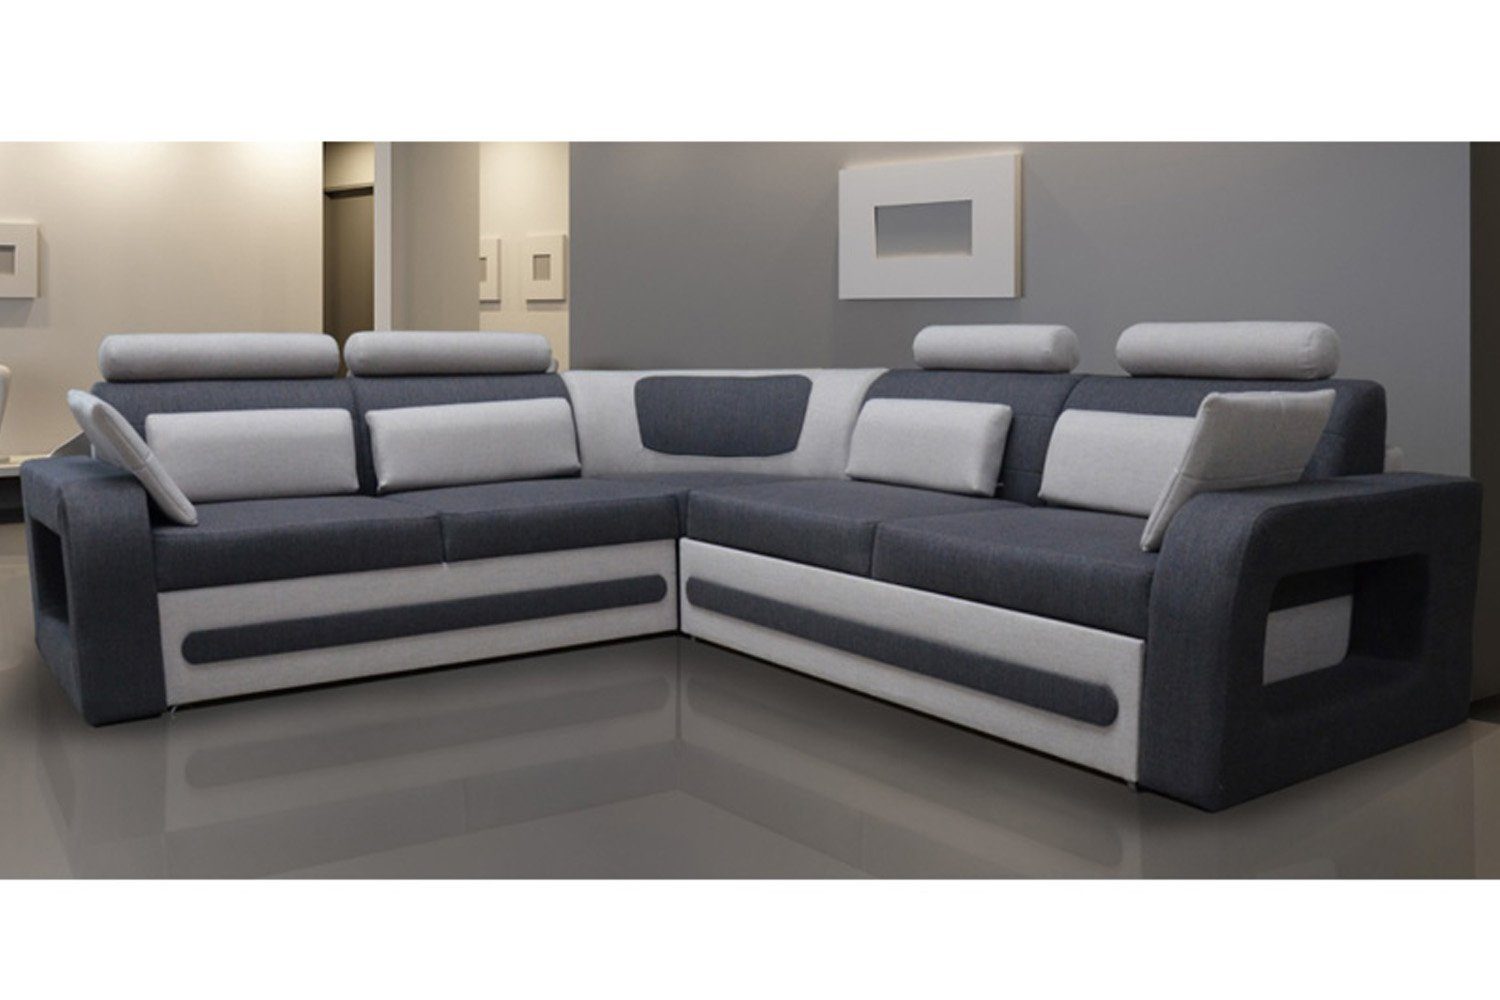 JVmoebel Ecksofa, Design Sofa Ecksofa Schlafsofa Bettfunktion Couch Leder Polster Grau/Weiß